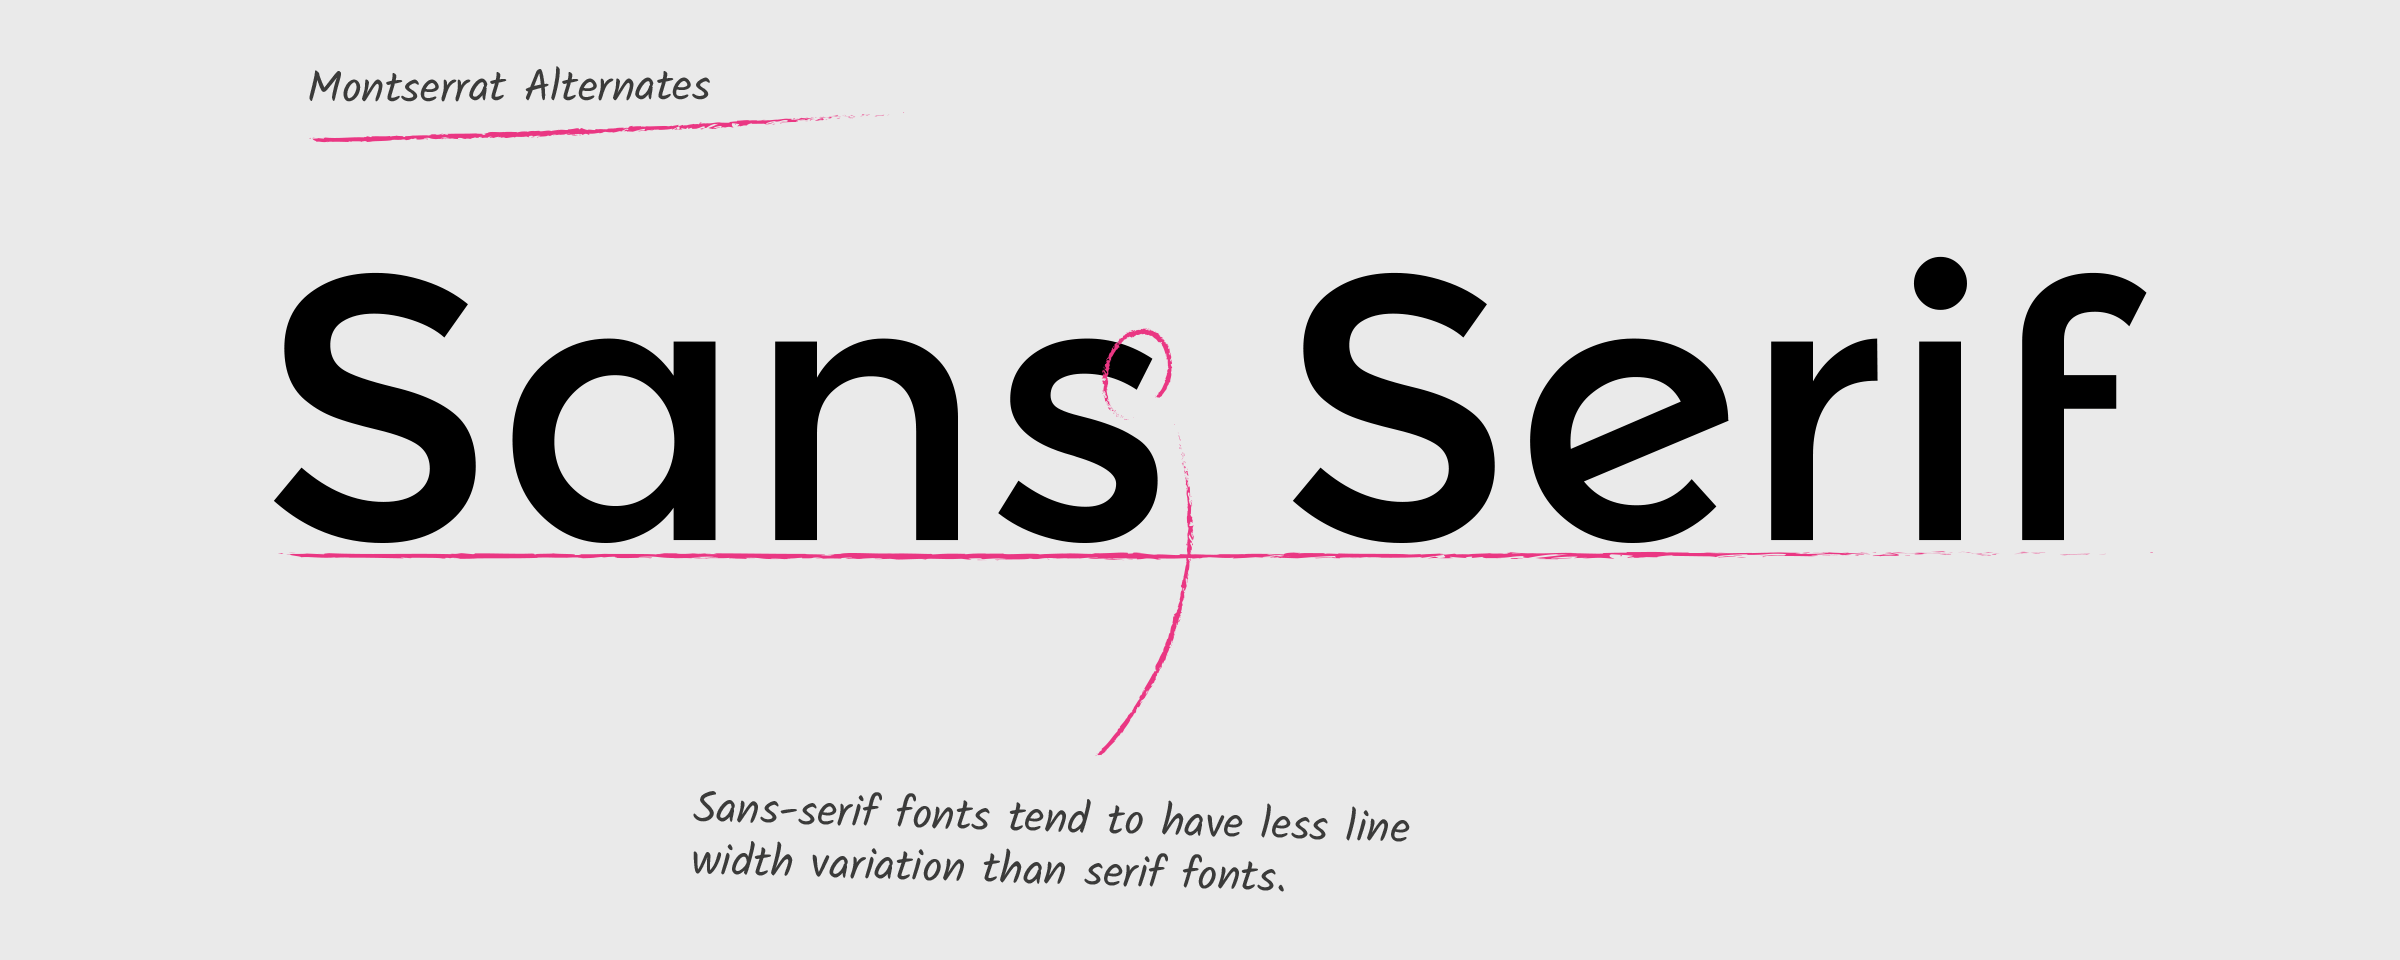 Sans Serif Logo - Reinvent your brand - Serif or Sans Serif? | Equals Creative